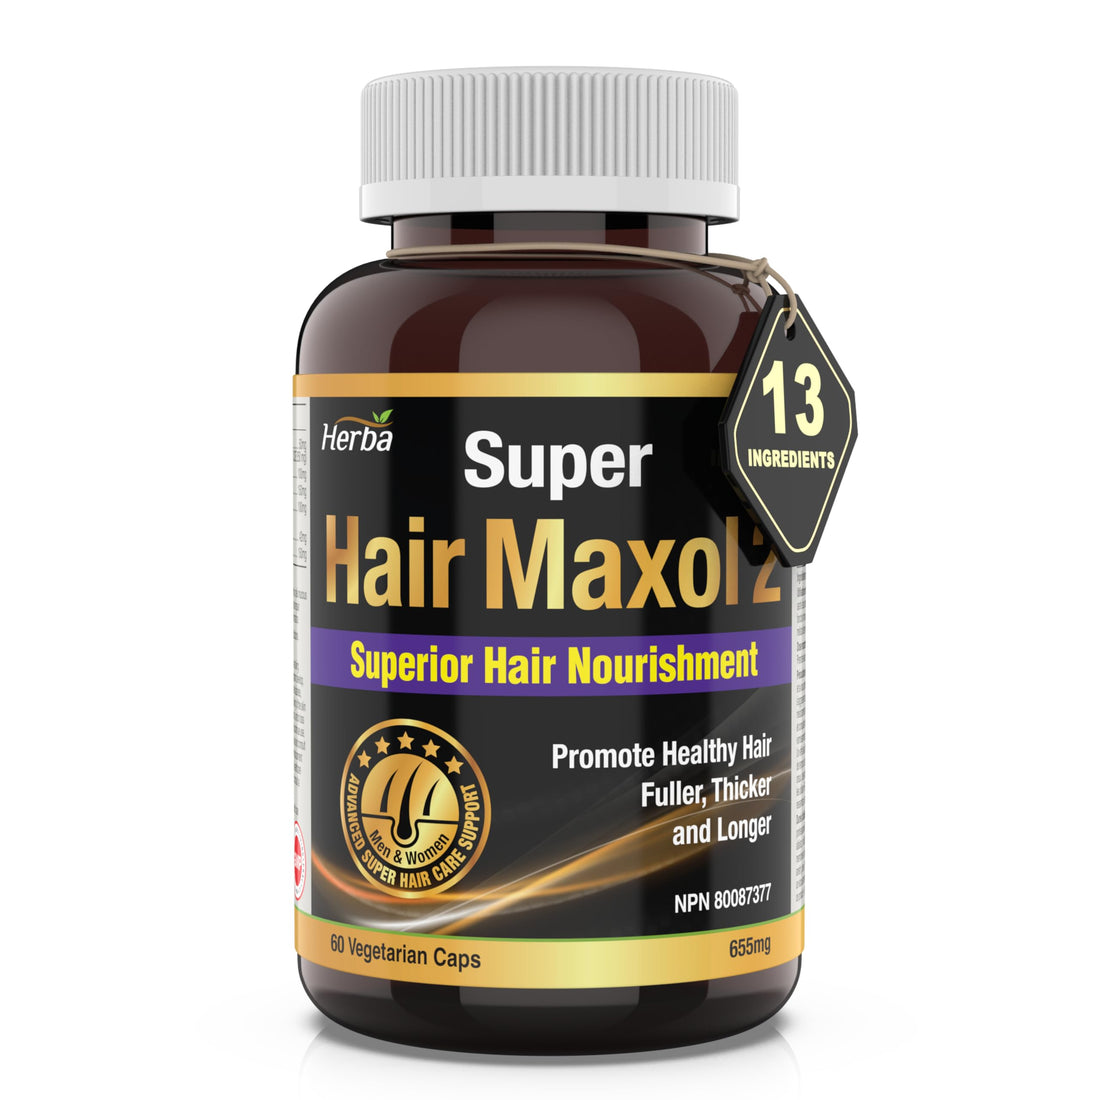 Herba Hair Maxol 2 Hair Growth Vitamins with Biotin for Hair Growth for Men and Women